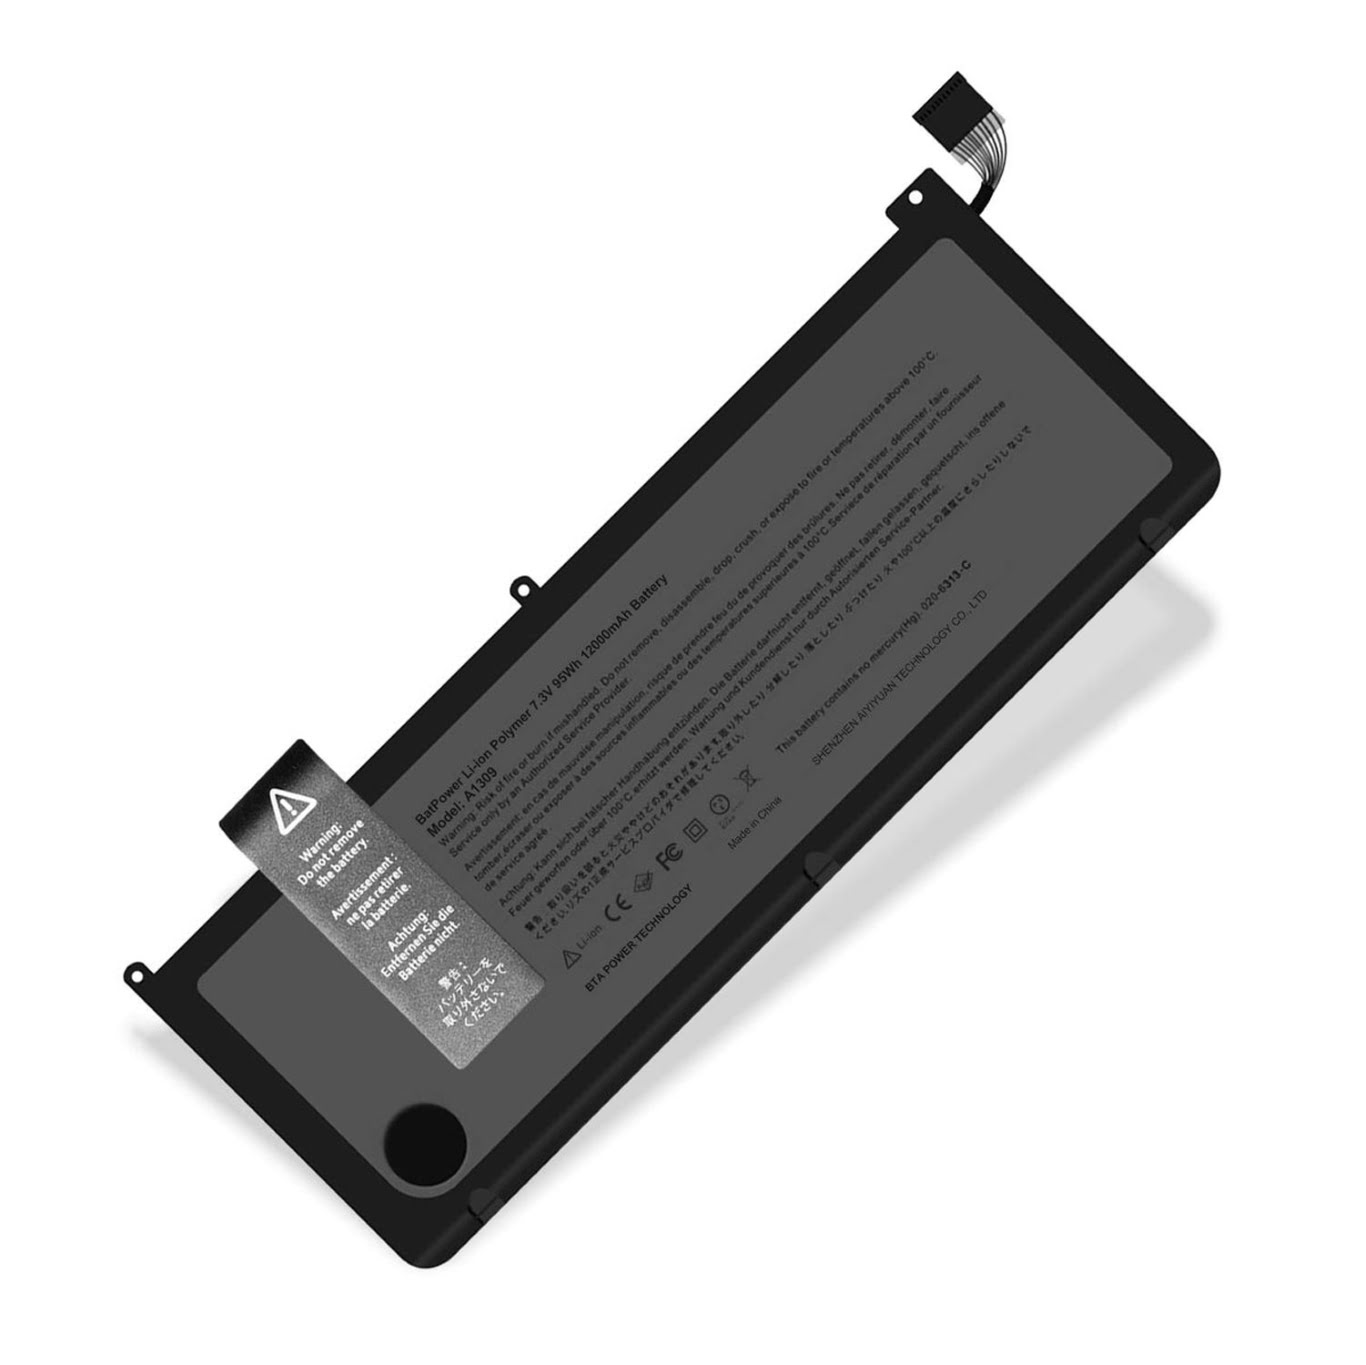 Apple A1309, 020-6313-c Laptop Battery For Macbook Pro 17